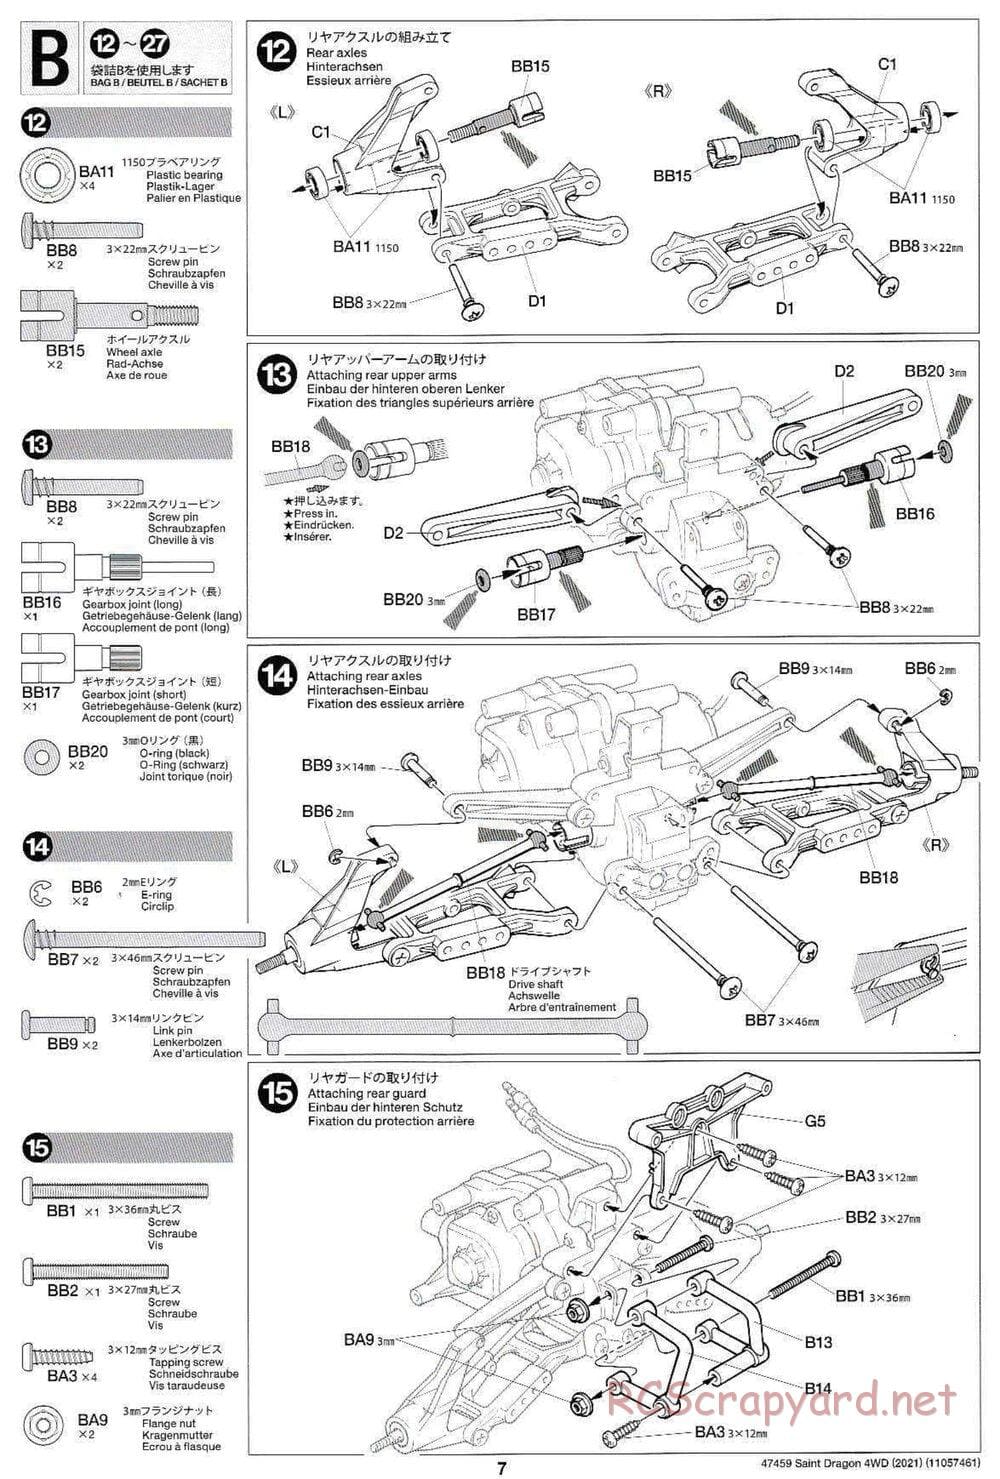 Tamiya - Saint Dragon (2021) Chassis - Manual - Page 7